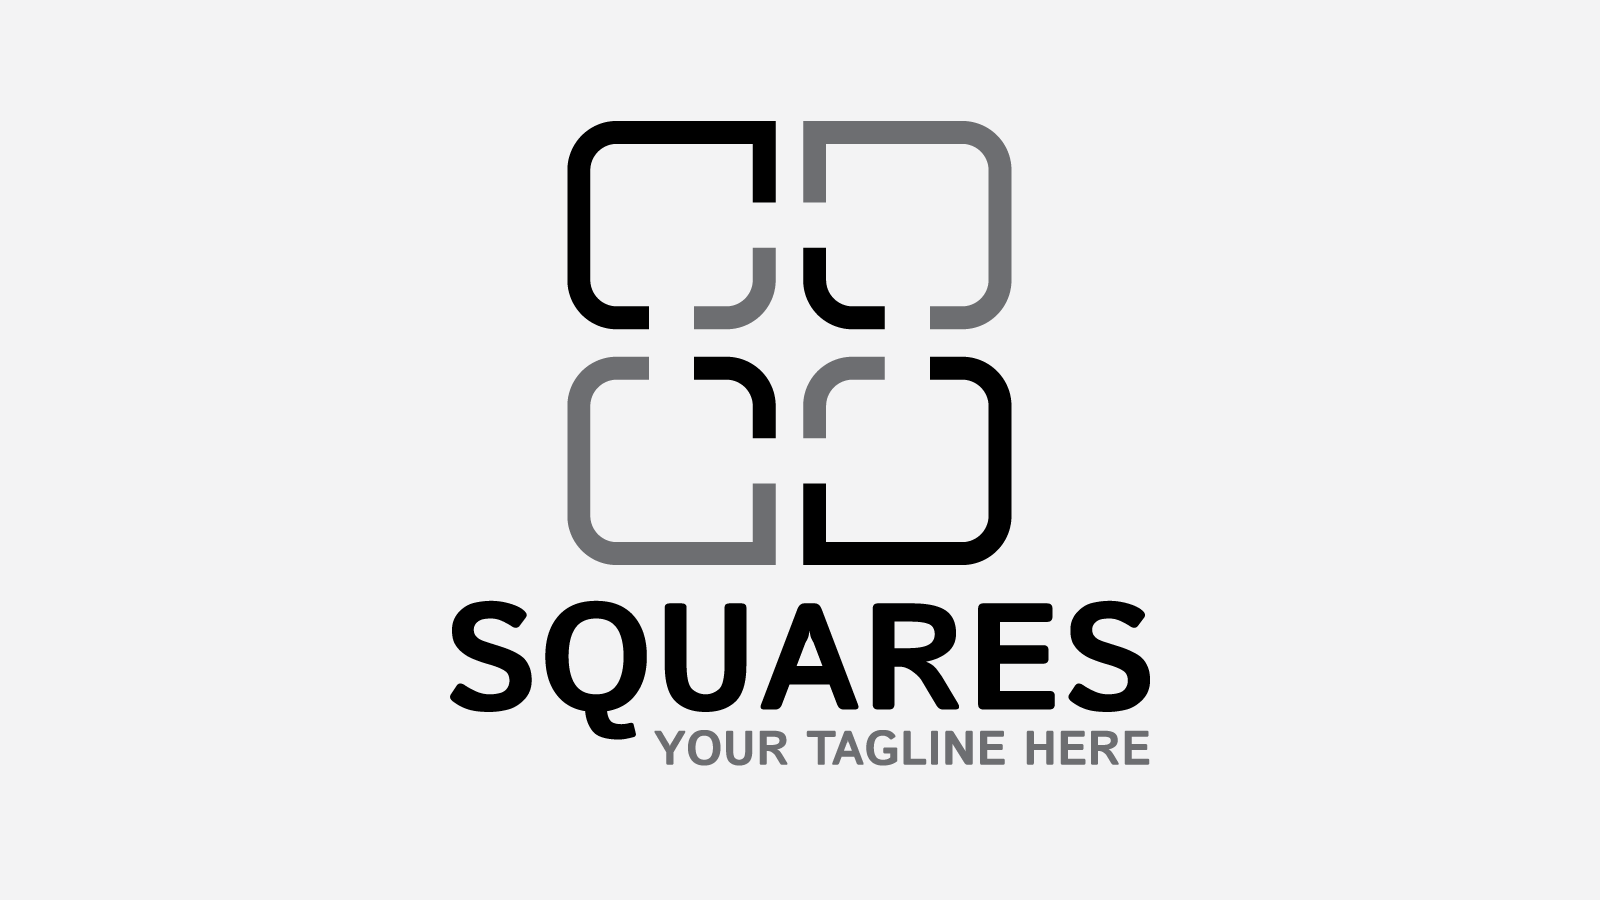 Google Squares Logo - SQUARES free logo design. Zfreegraphic: Free vector logo downloads